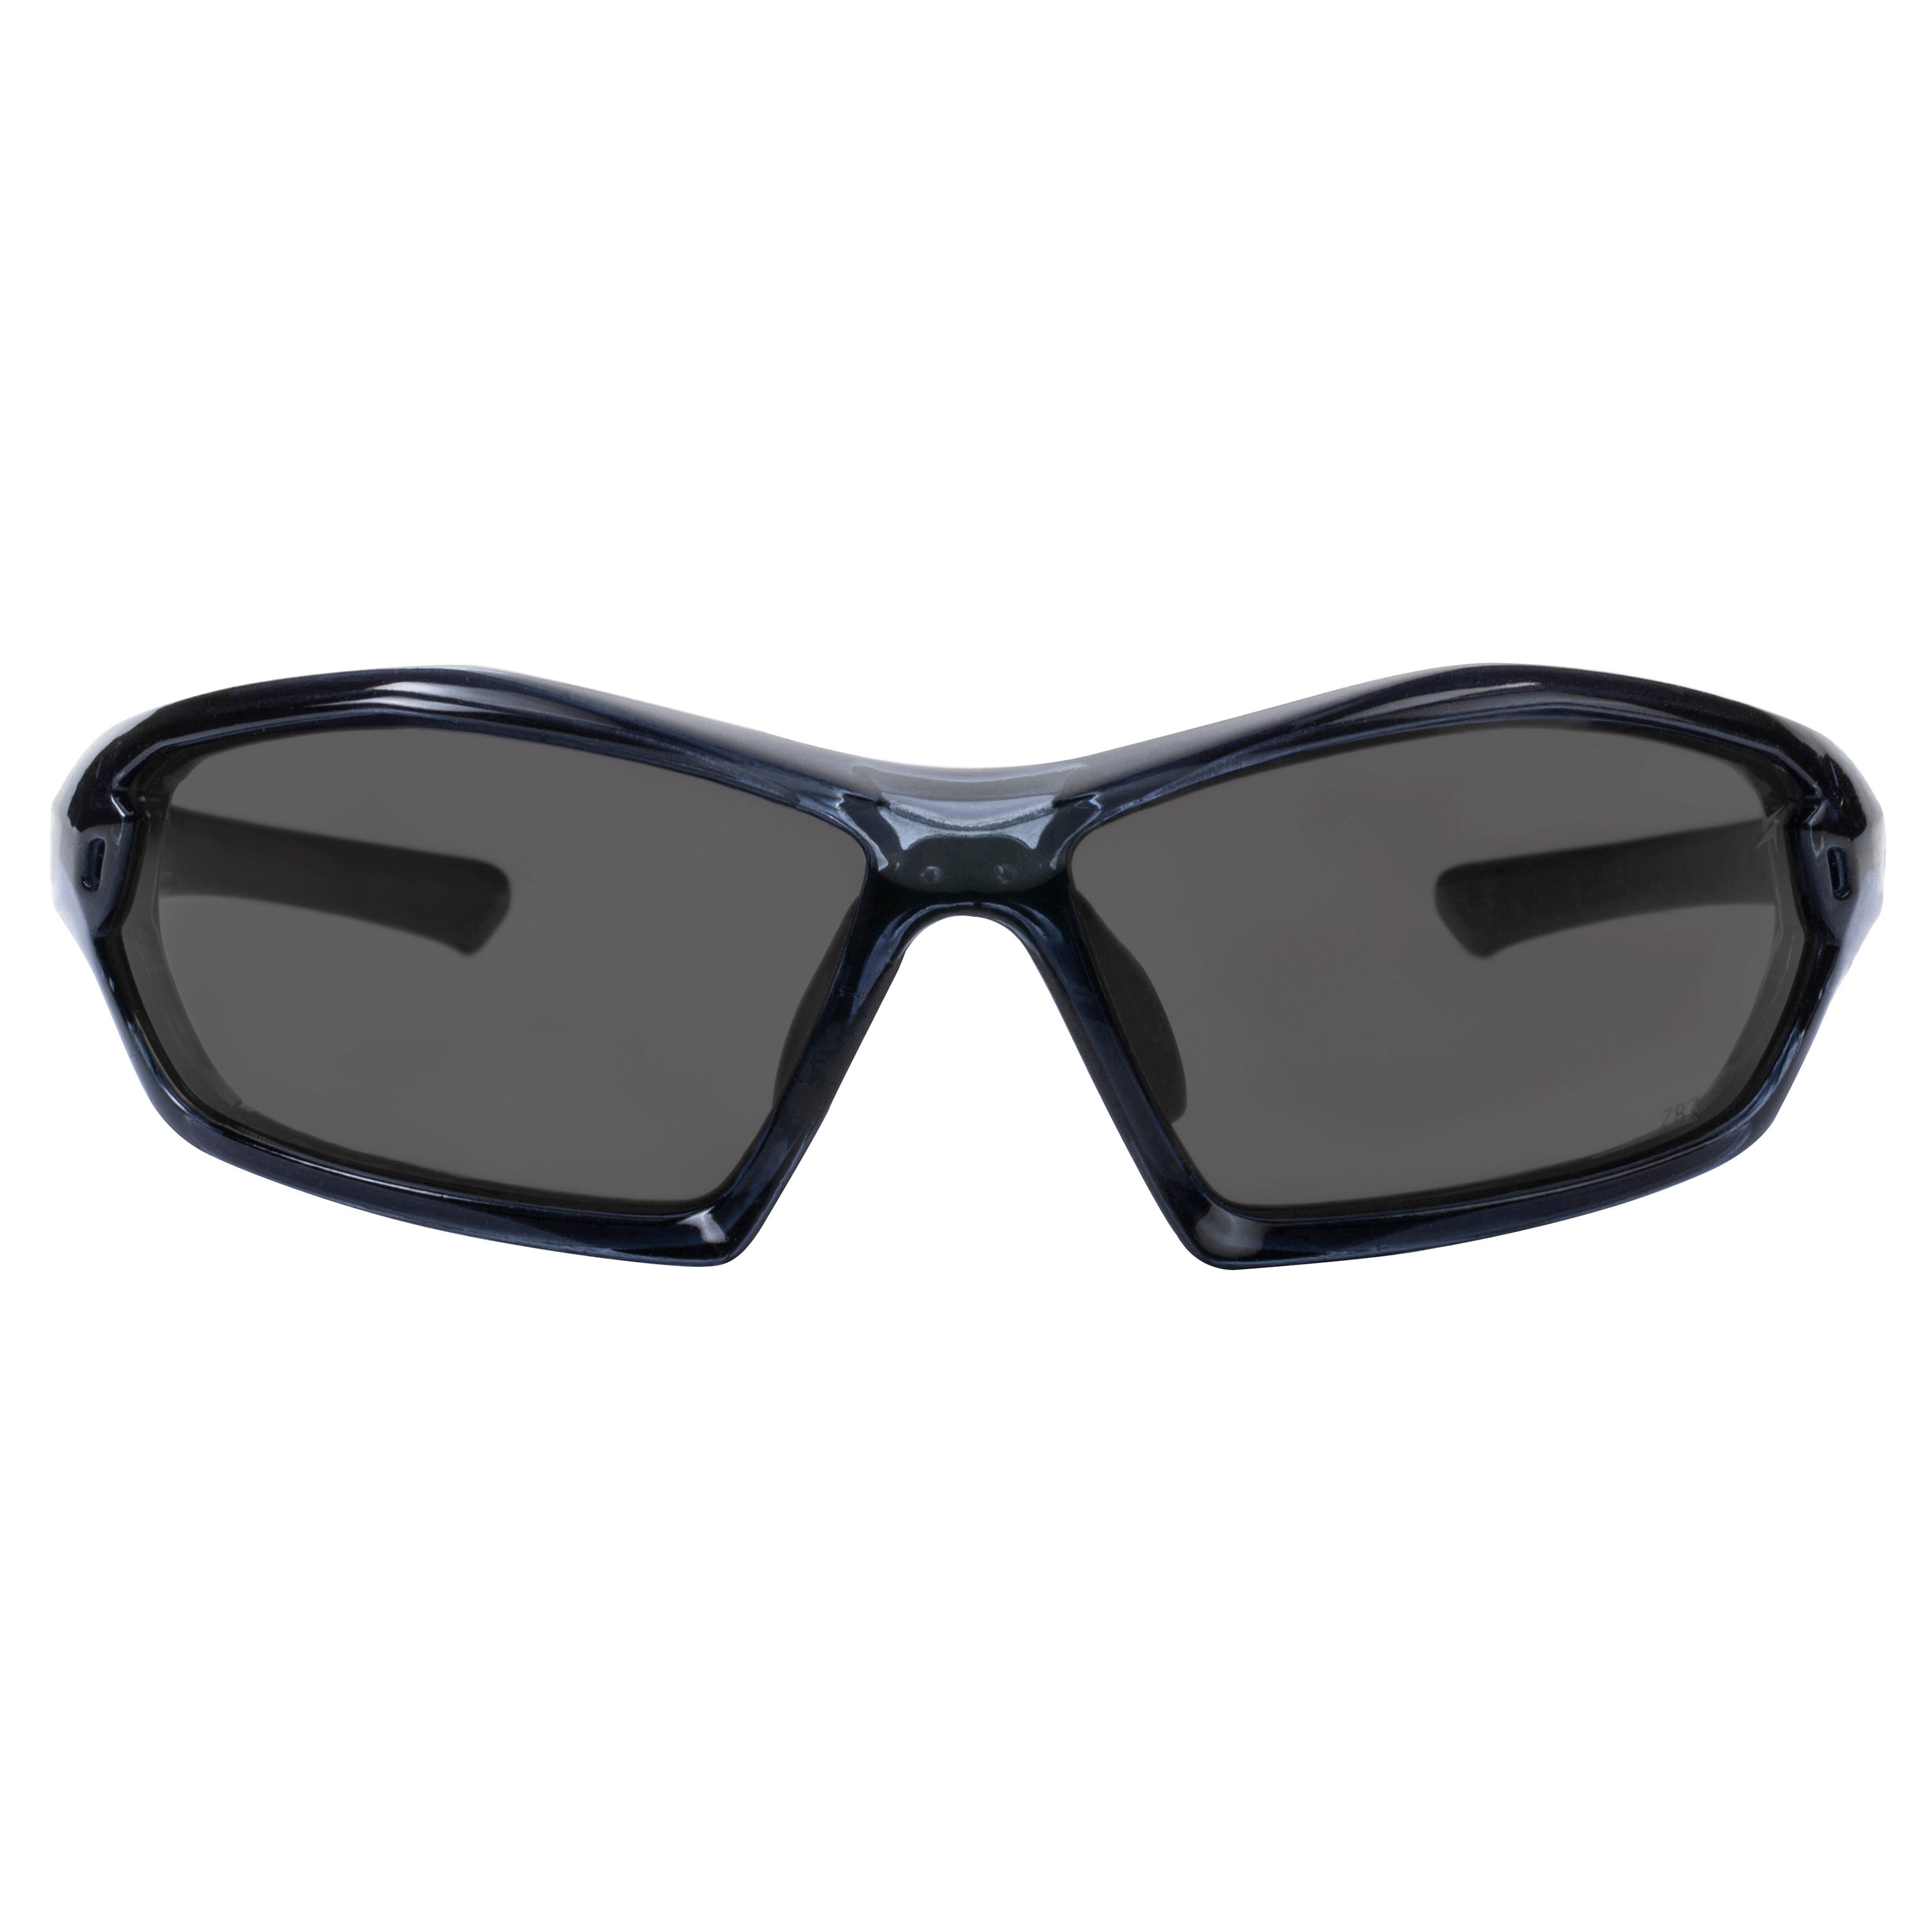 Dark Smoke Lens Translucent Frame Sport Safety Sunglasses with Adjustable Nose Pads.